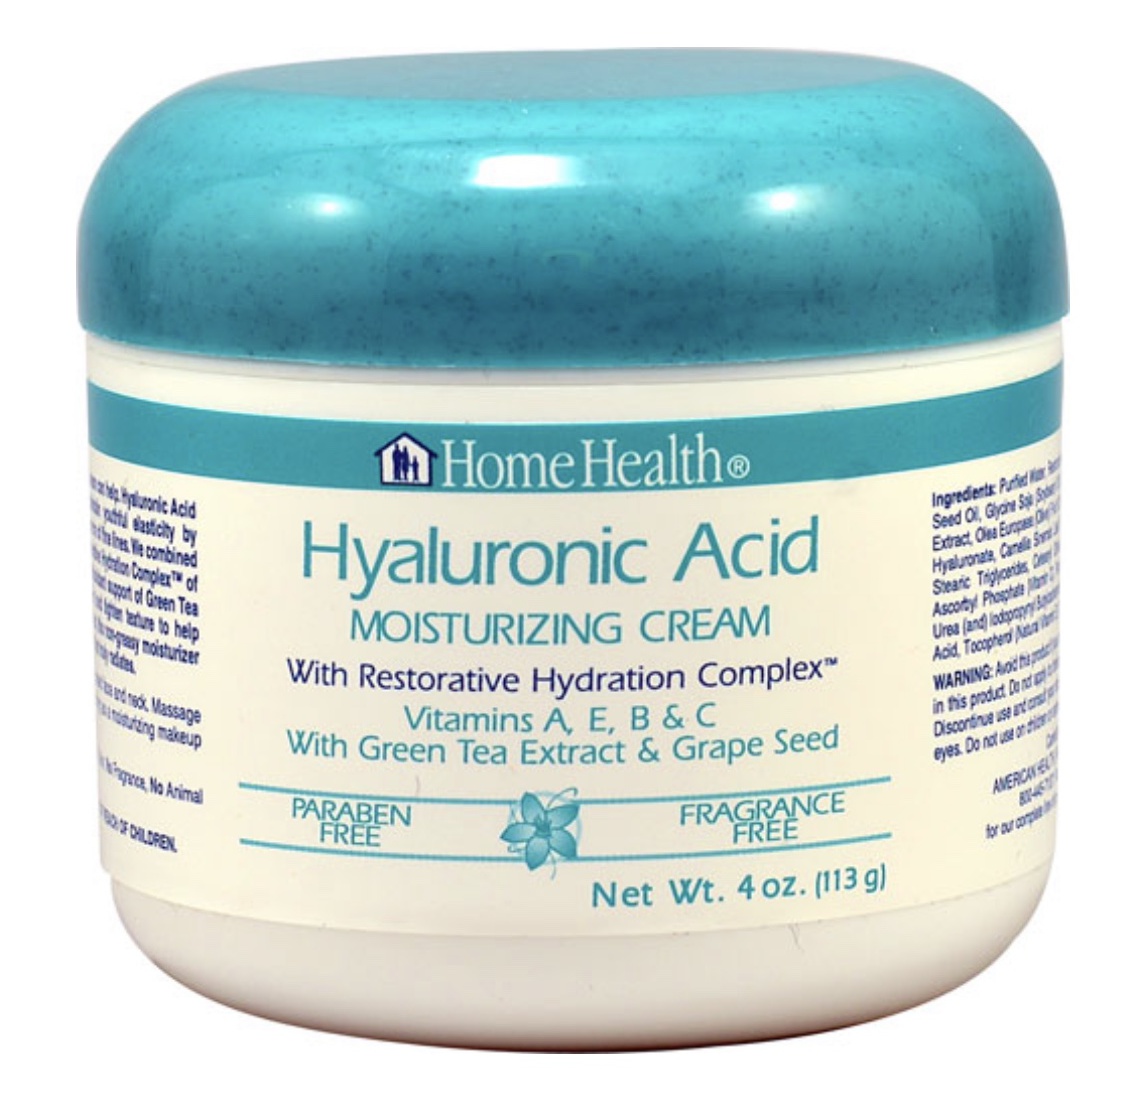 Home Health Hyaluronic Acid Moisturizing Cream